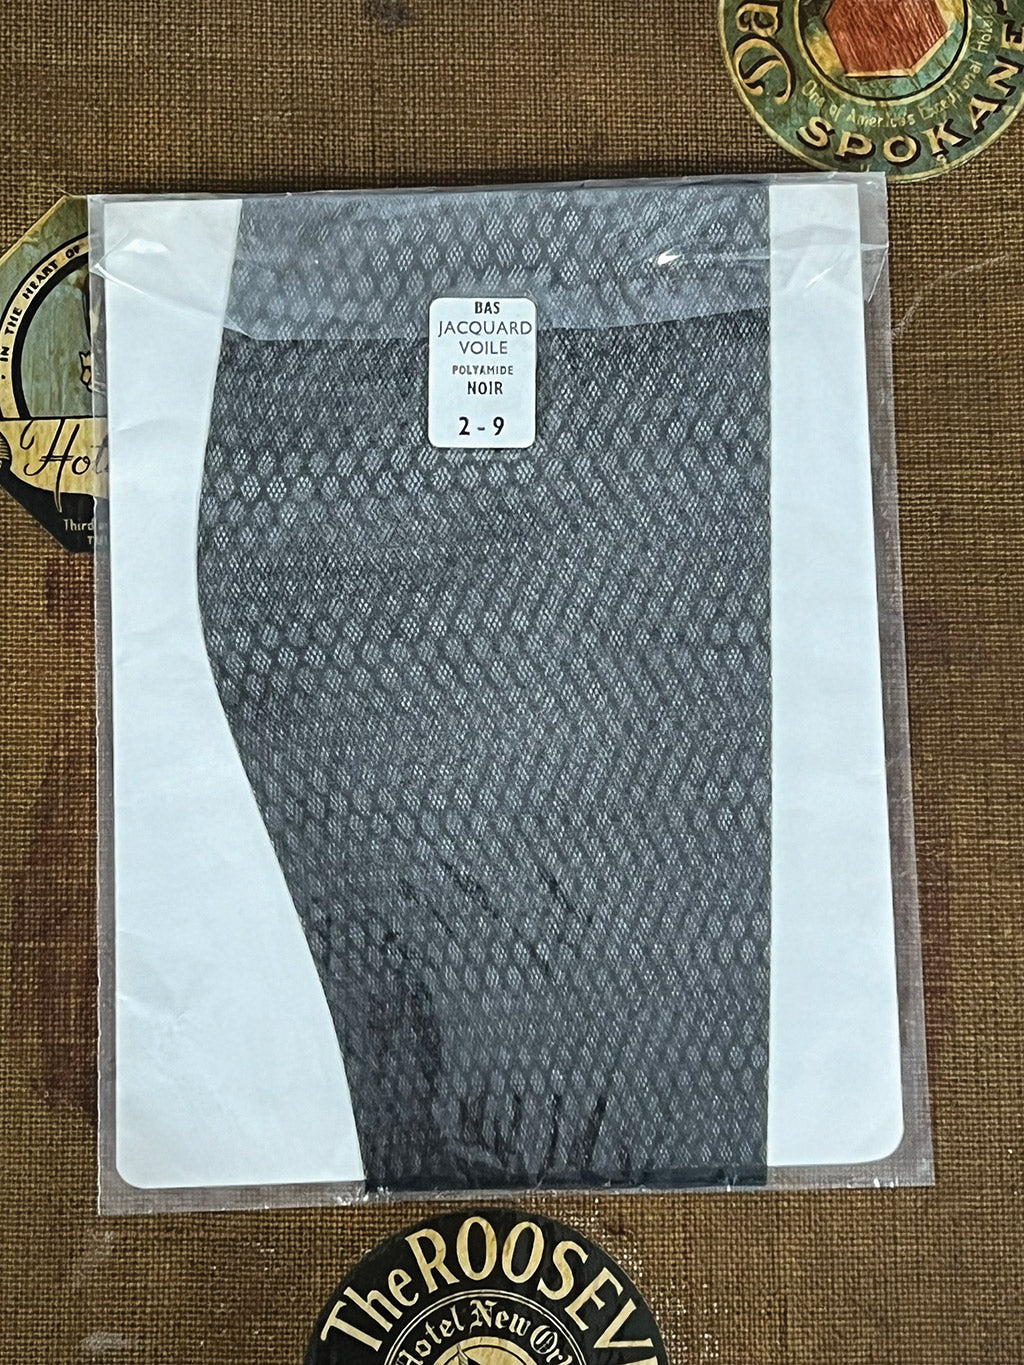 Vintage Black Jacquard Voile Stockings front